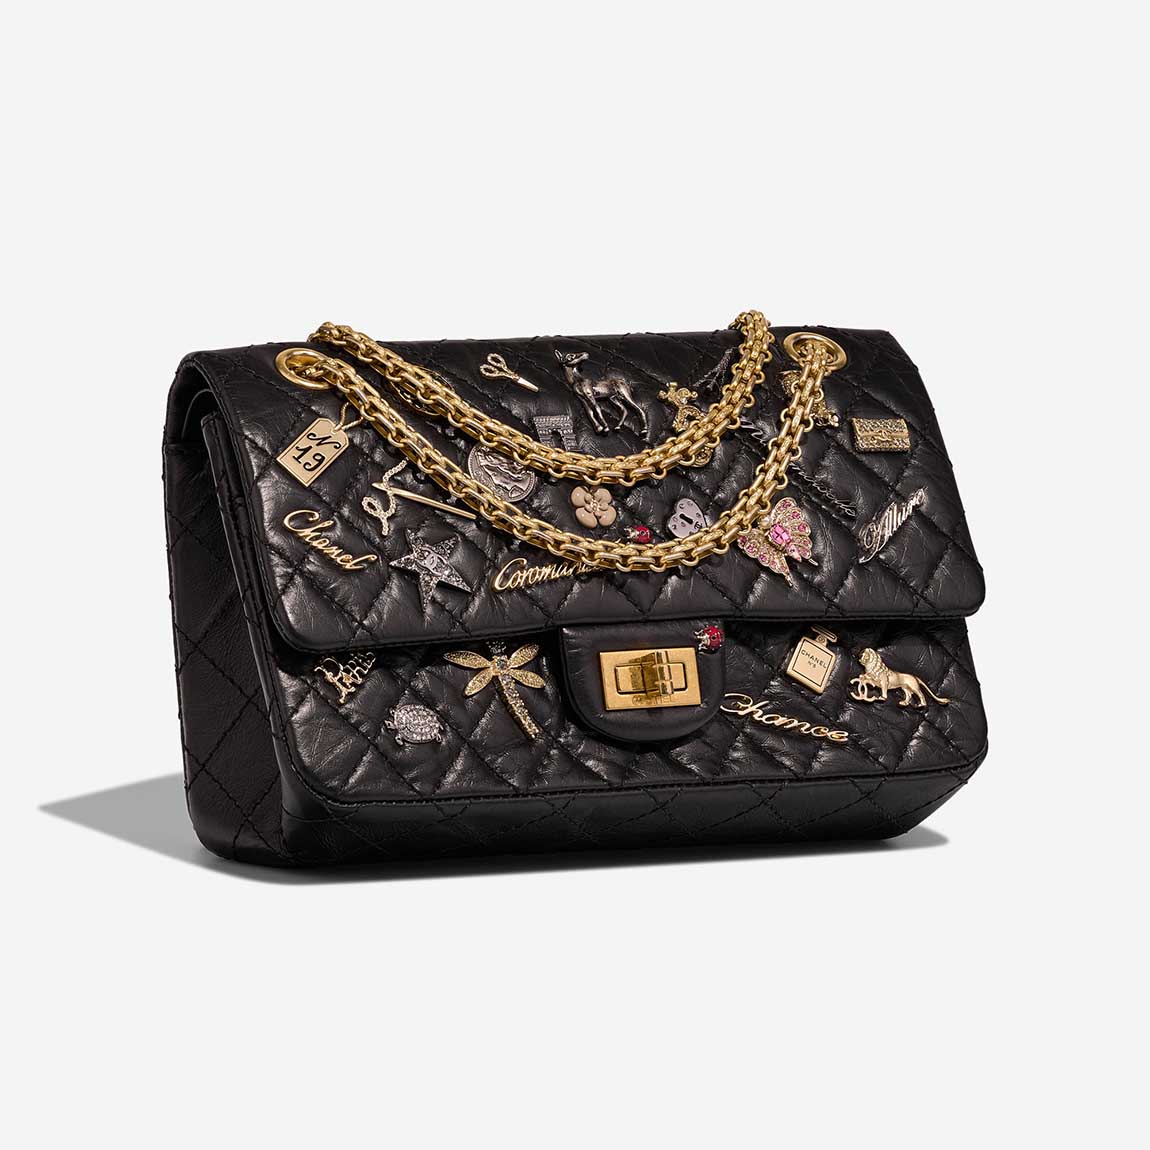 Chanel 2.55 Reissue 225 Aged Calf Black | Sell your designer bag